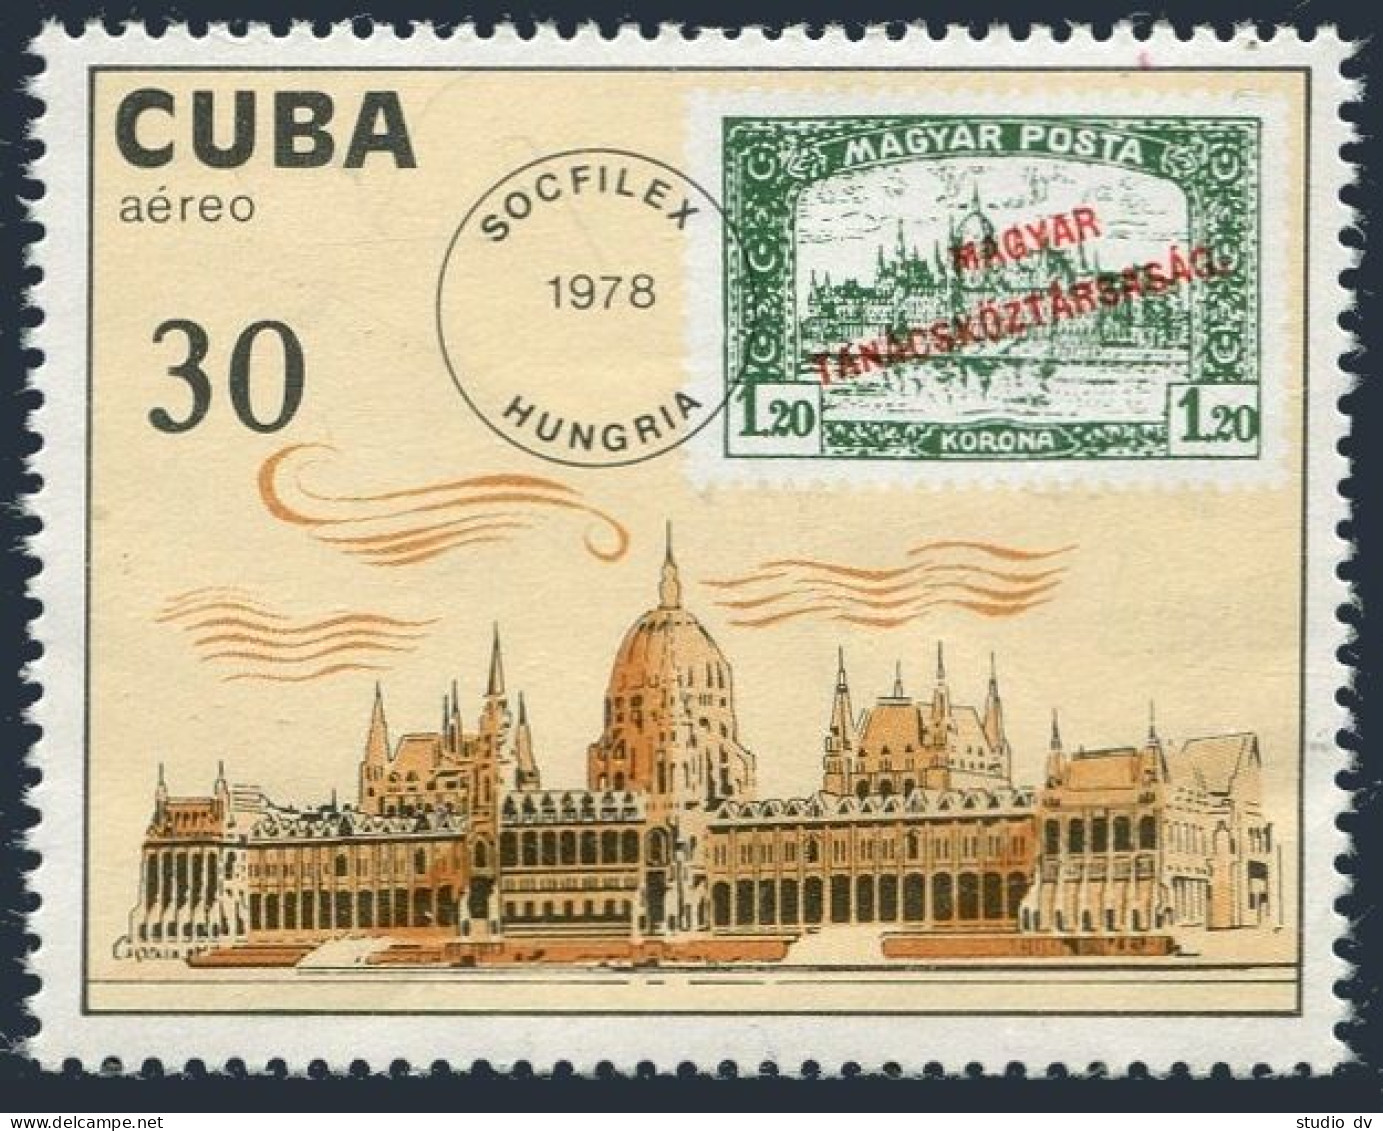 Cuba C280, MNH. Michel 2293. SOCFILEX-1978, Budapest. Hungarian Stamp. - Ungebraucht